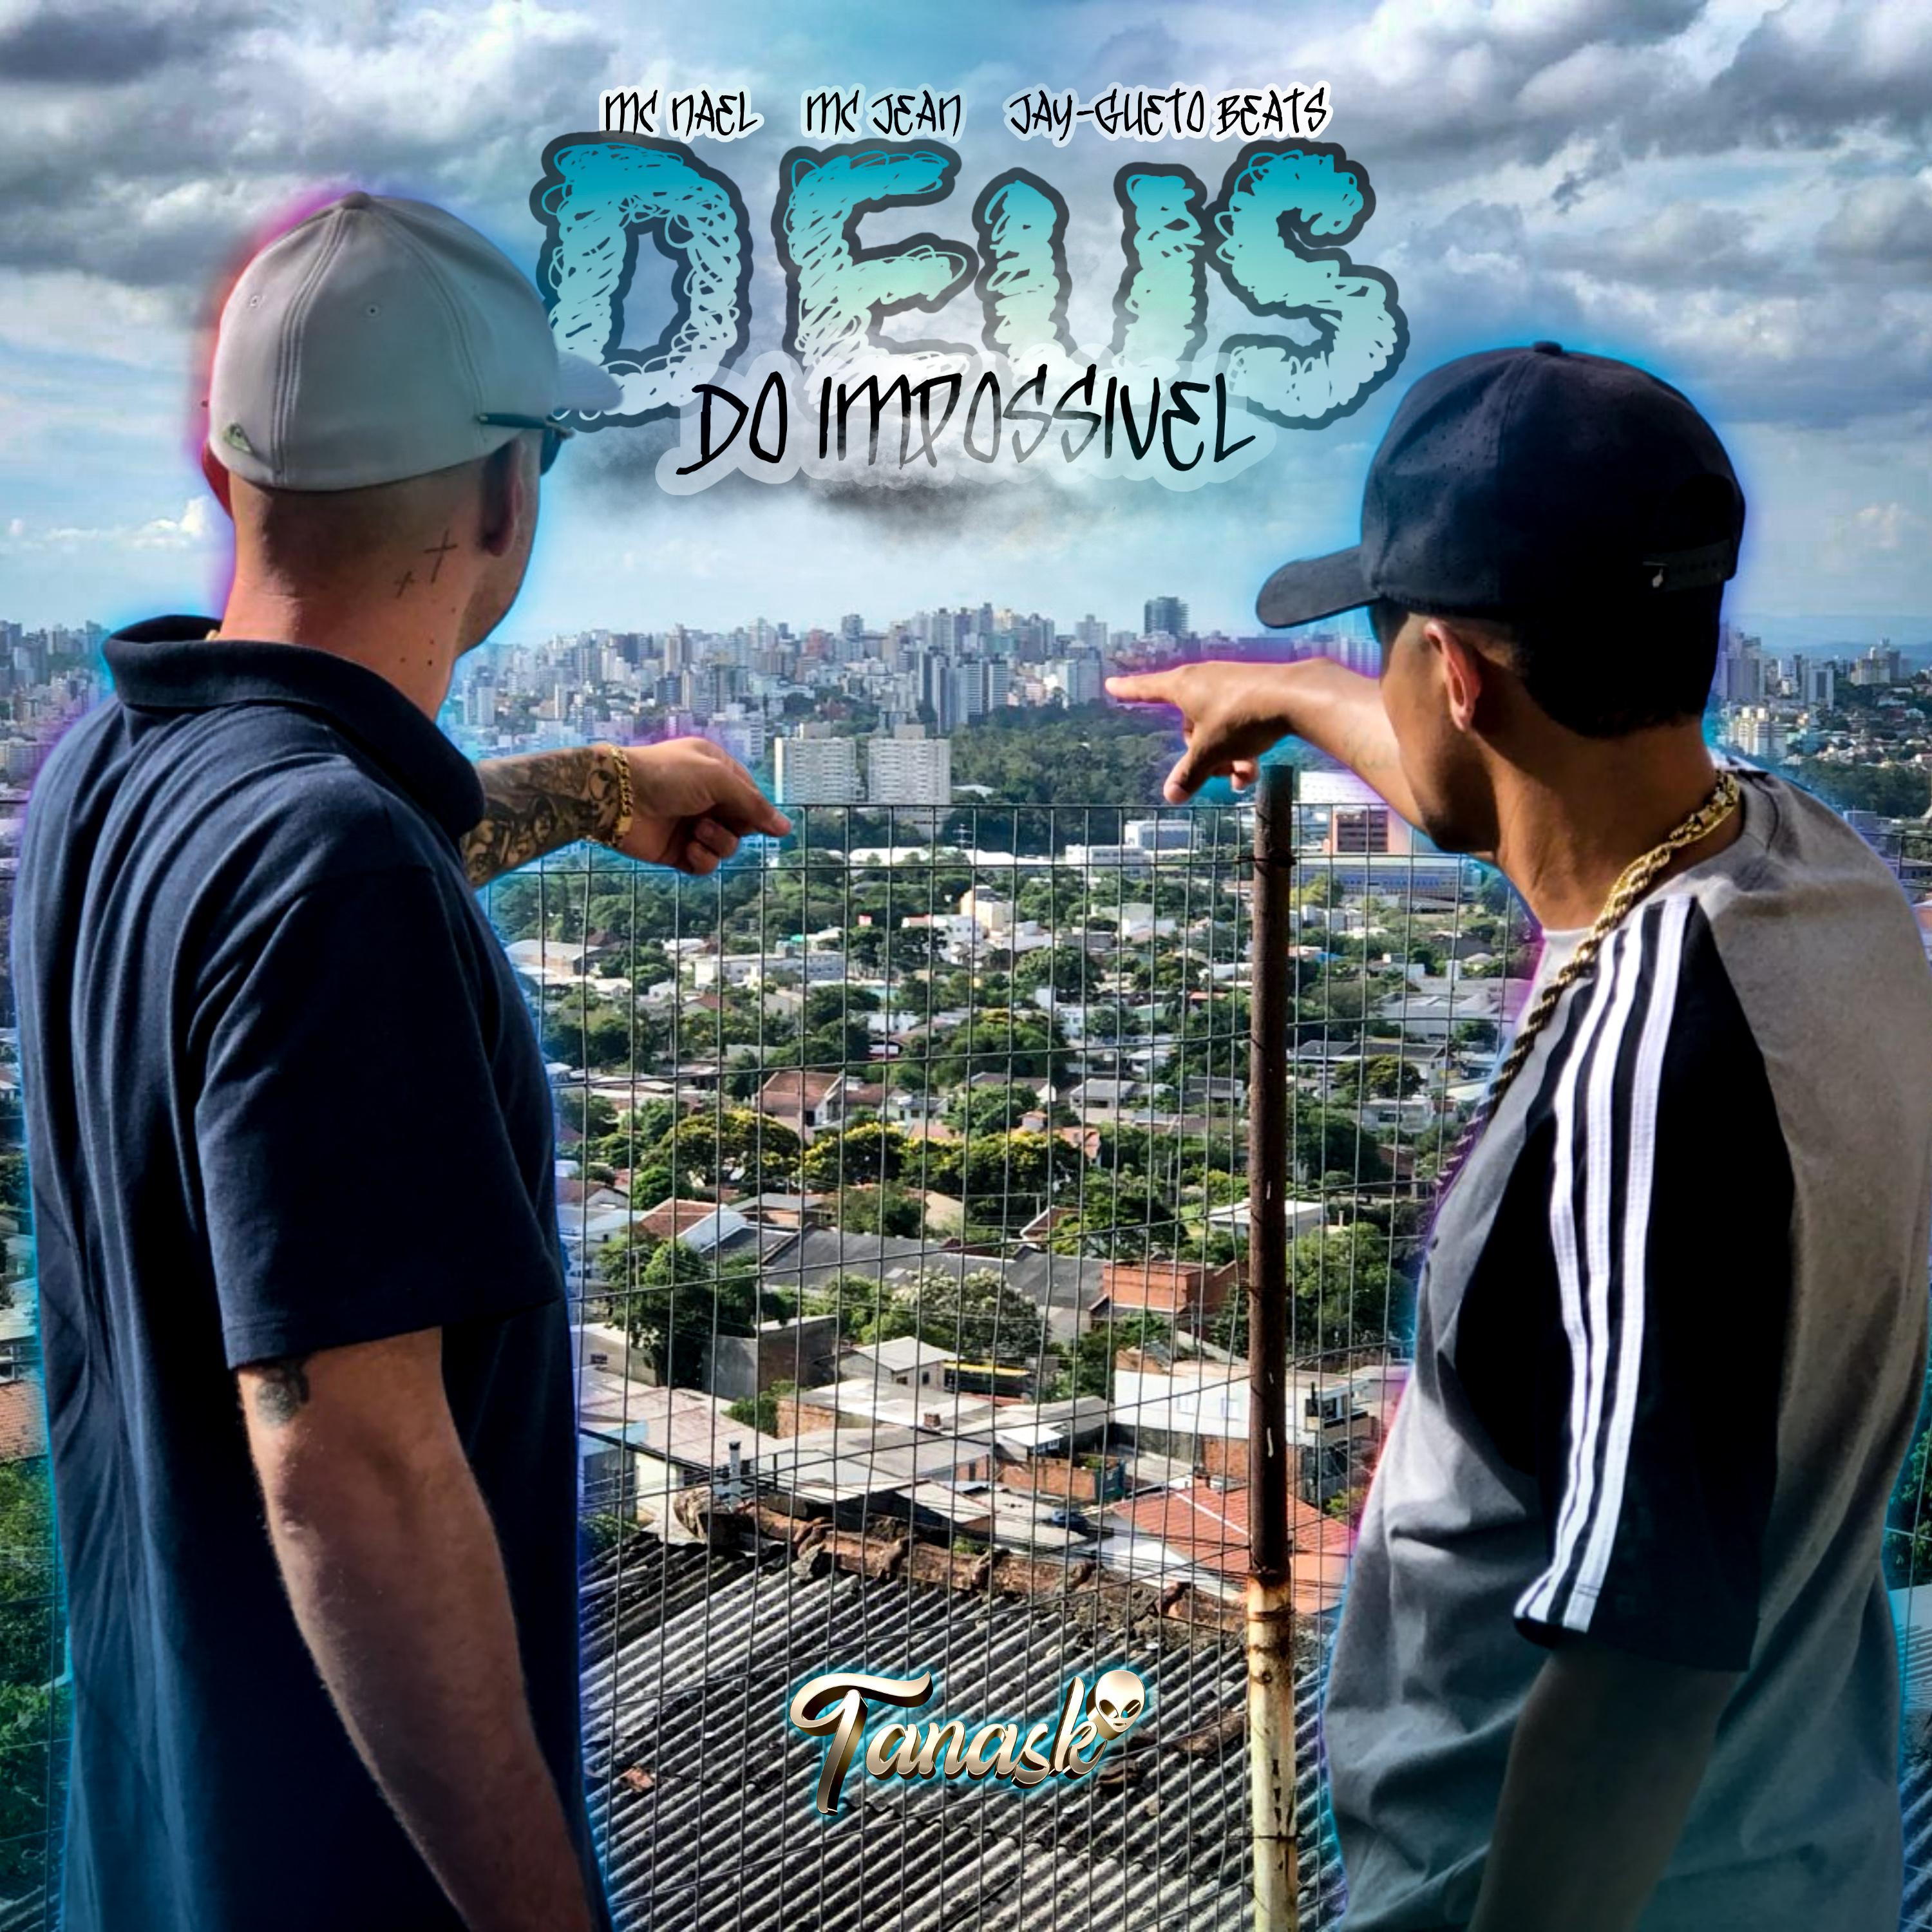 Постер альбома Deus do Impossível